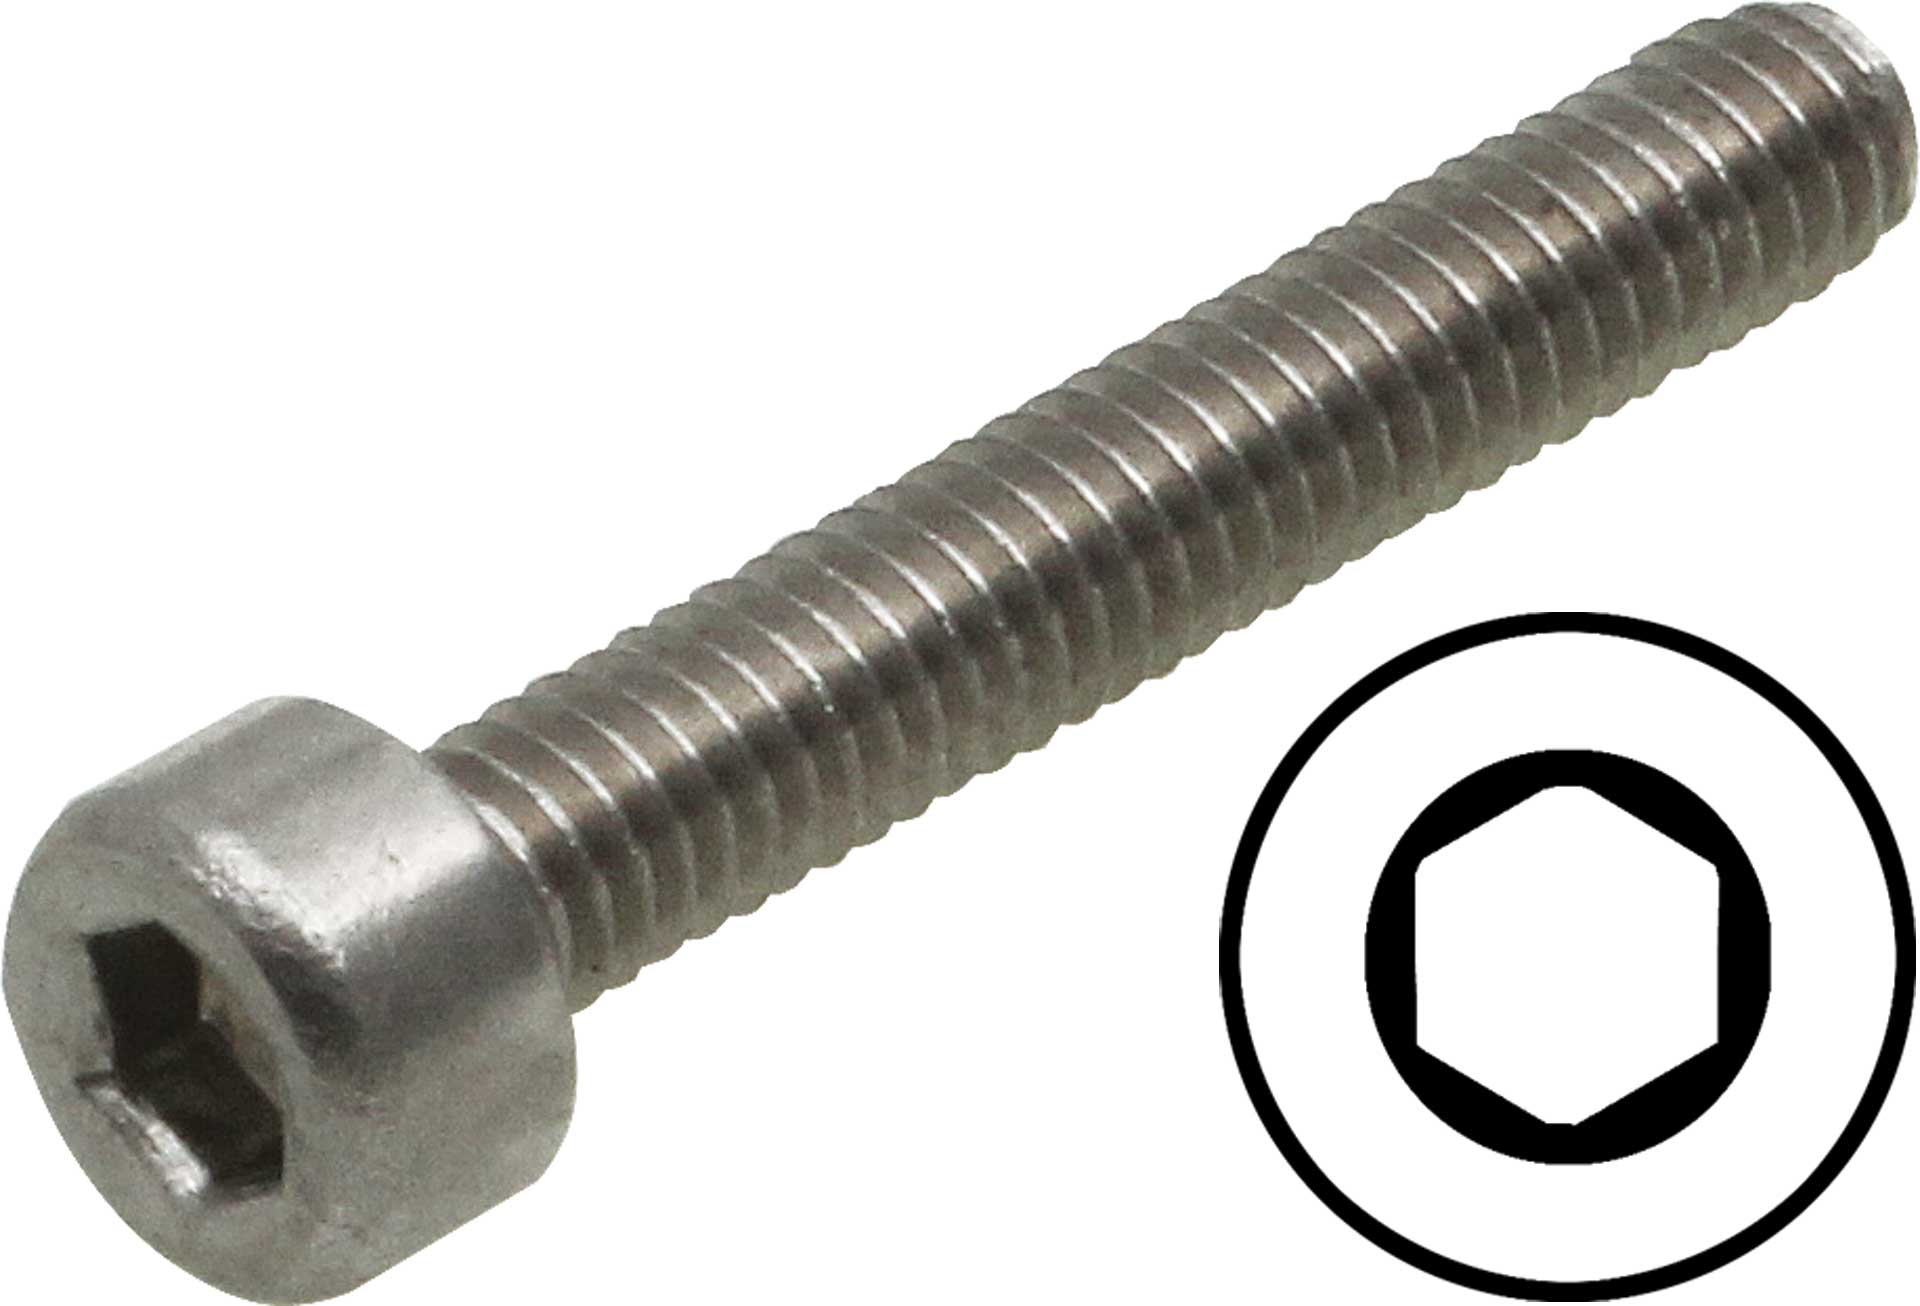 Modellbau Lindinger Hexagon socket screws M2/25mm 15pcs. Stainless steel, rustproof